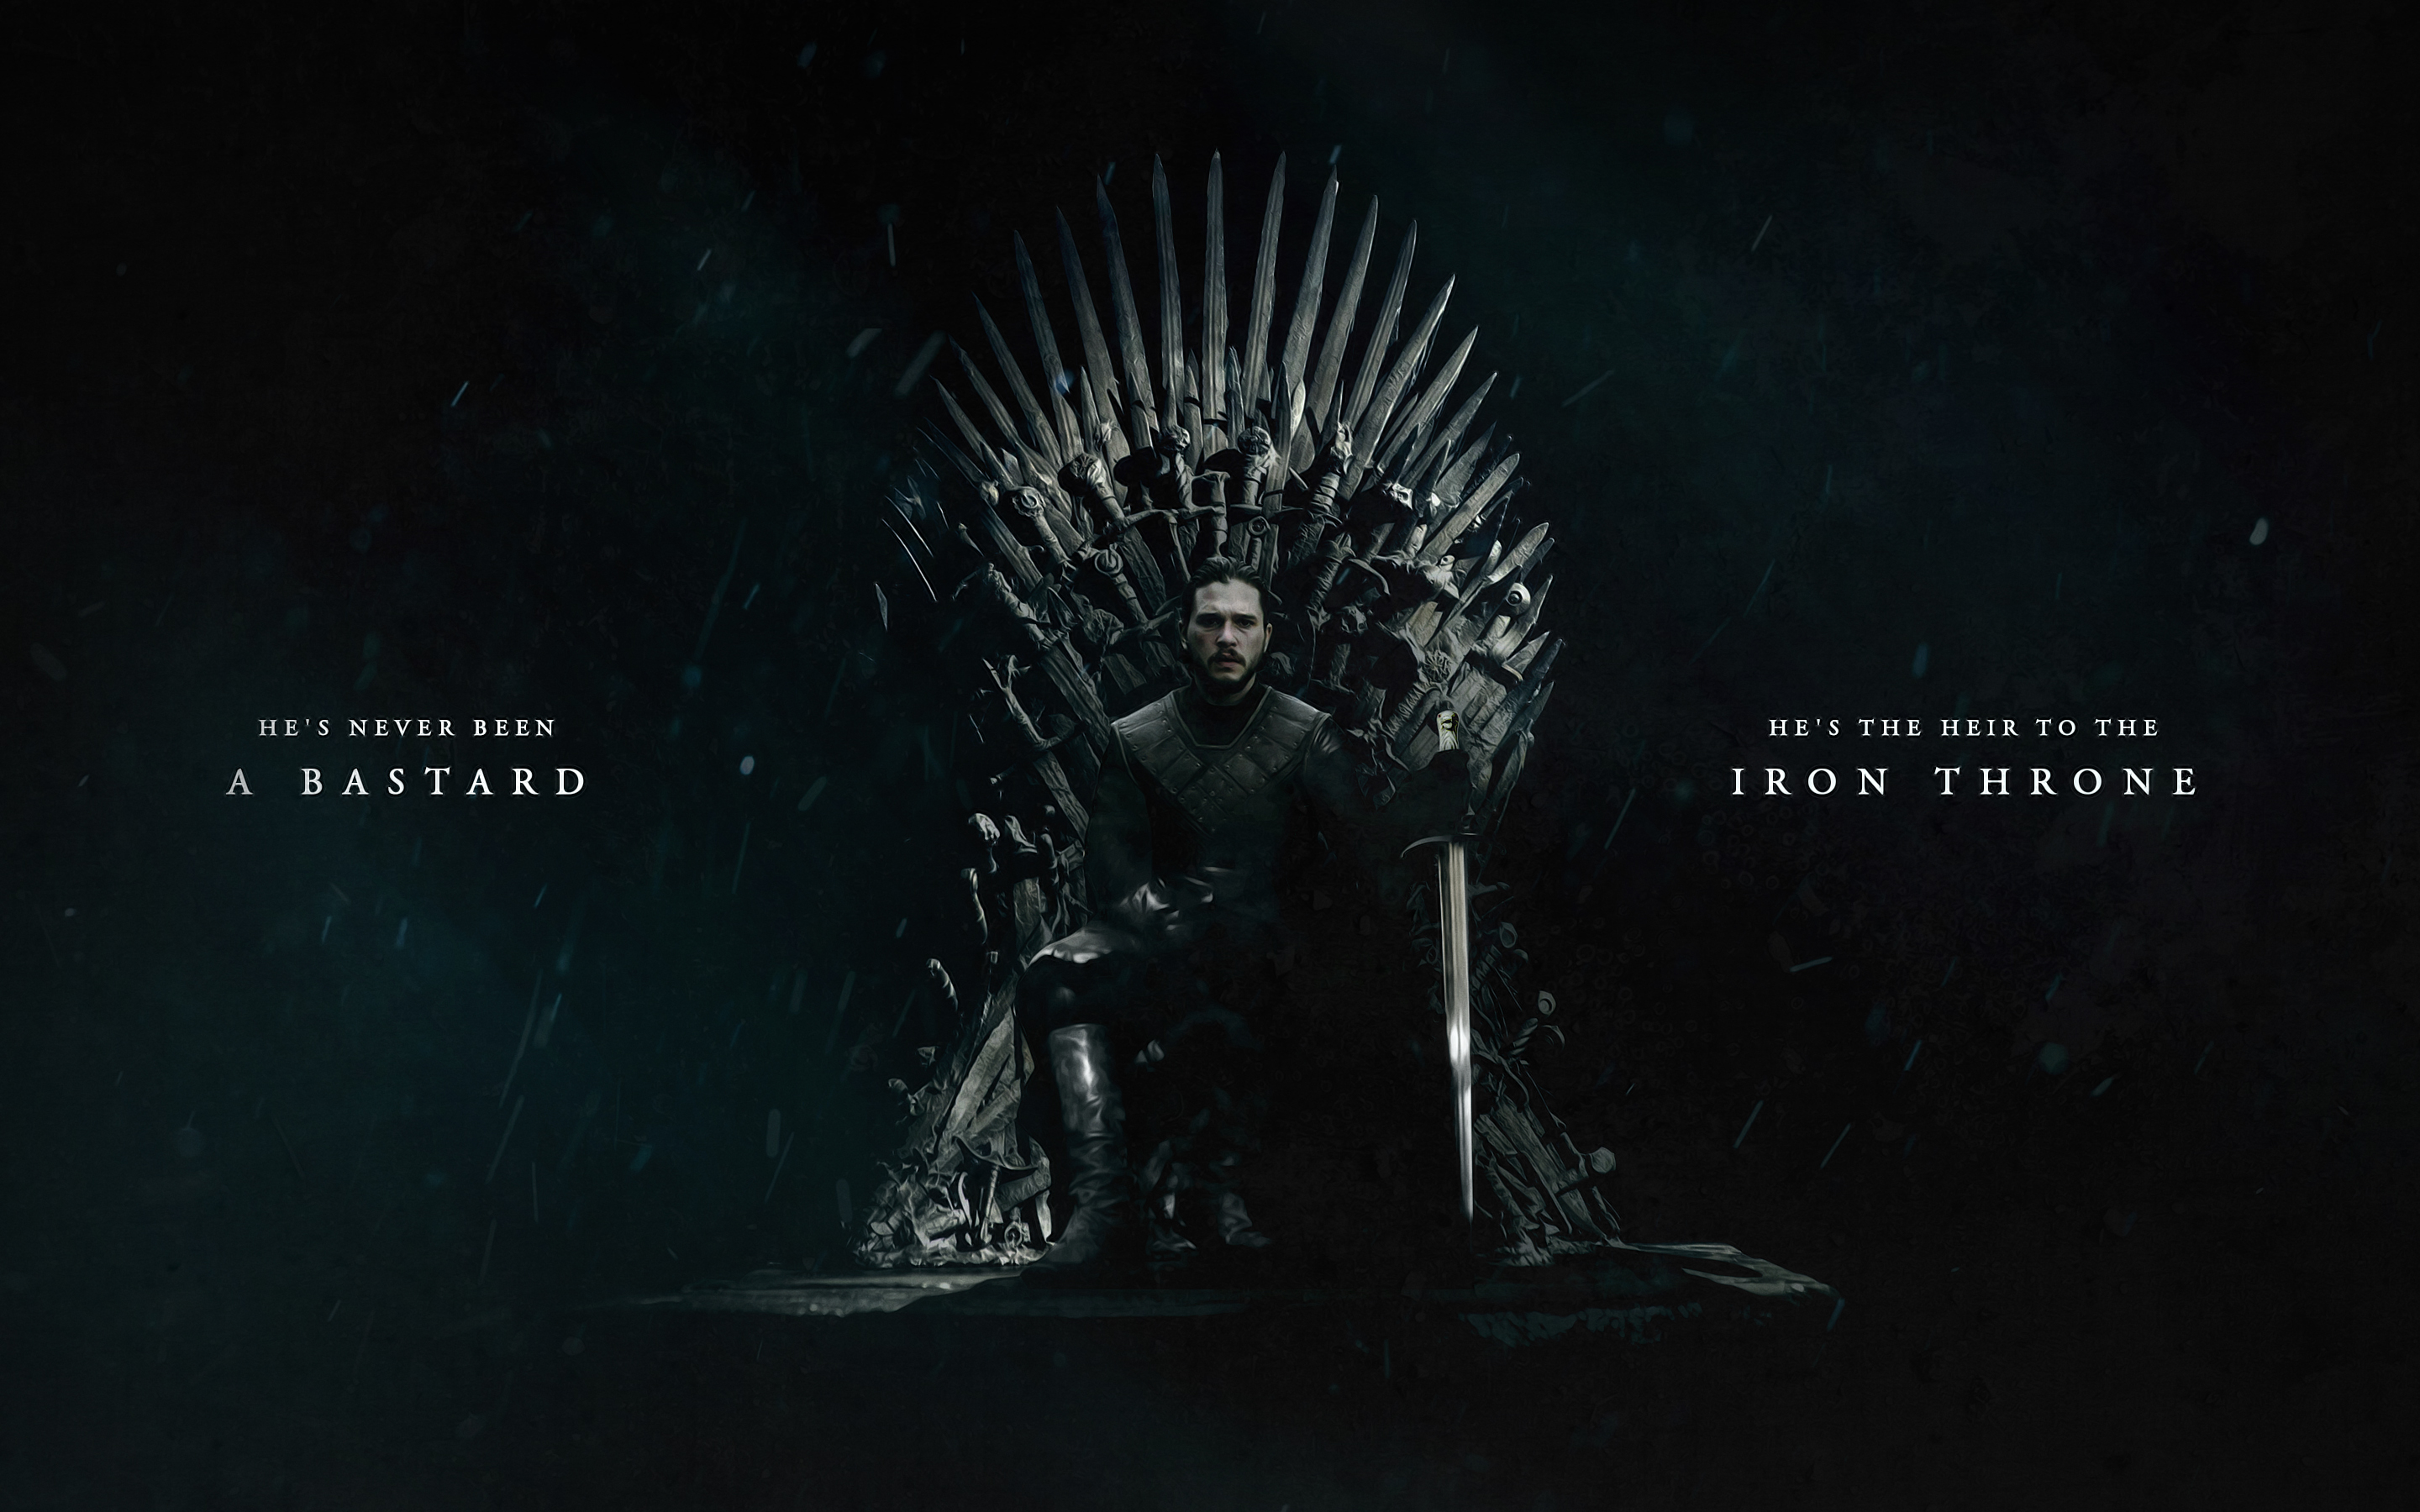 EVERYTHING] I edited a desktop wallpaper of Jon on the Iron Throne